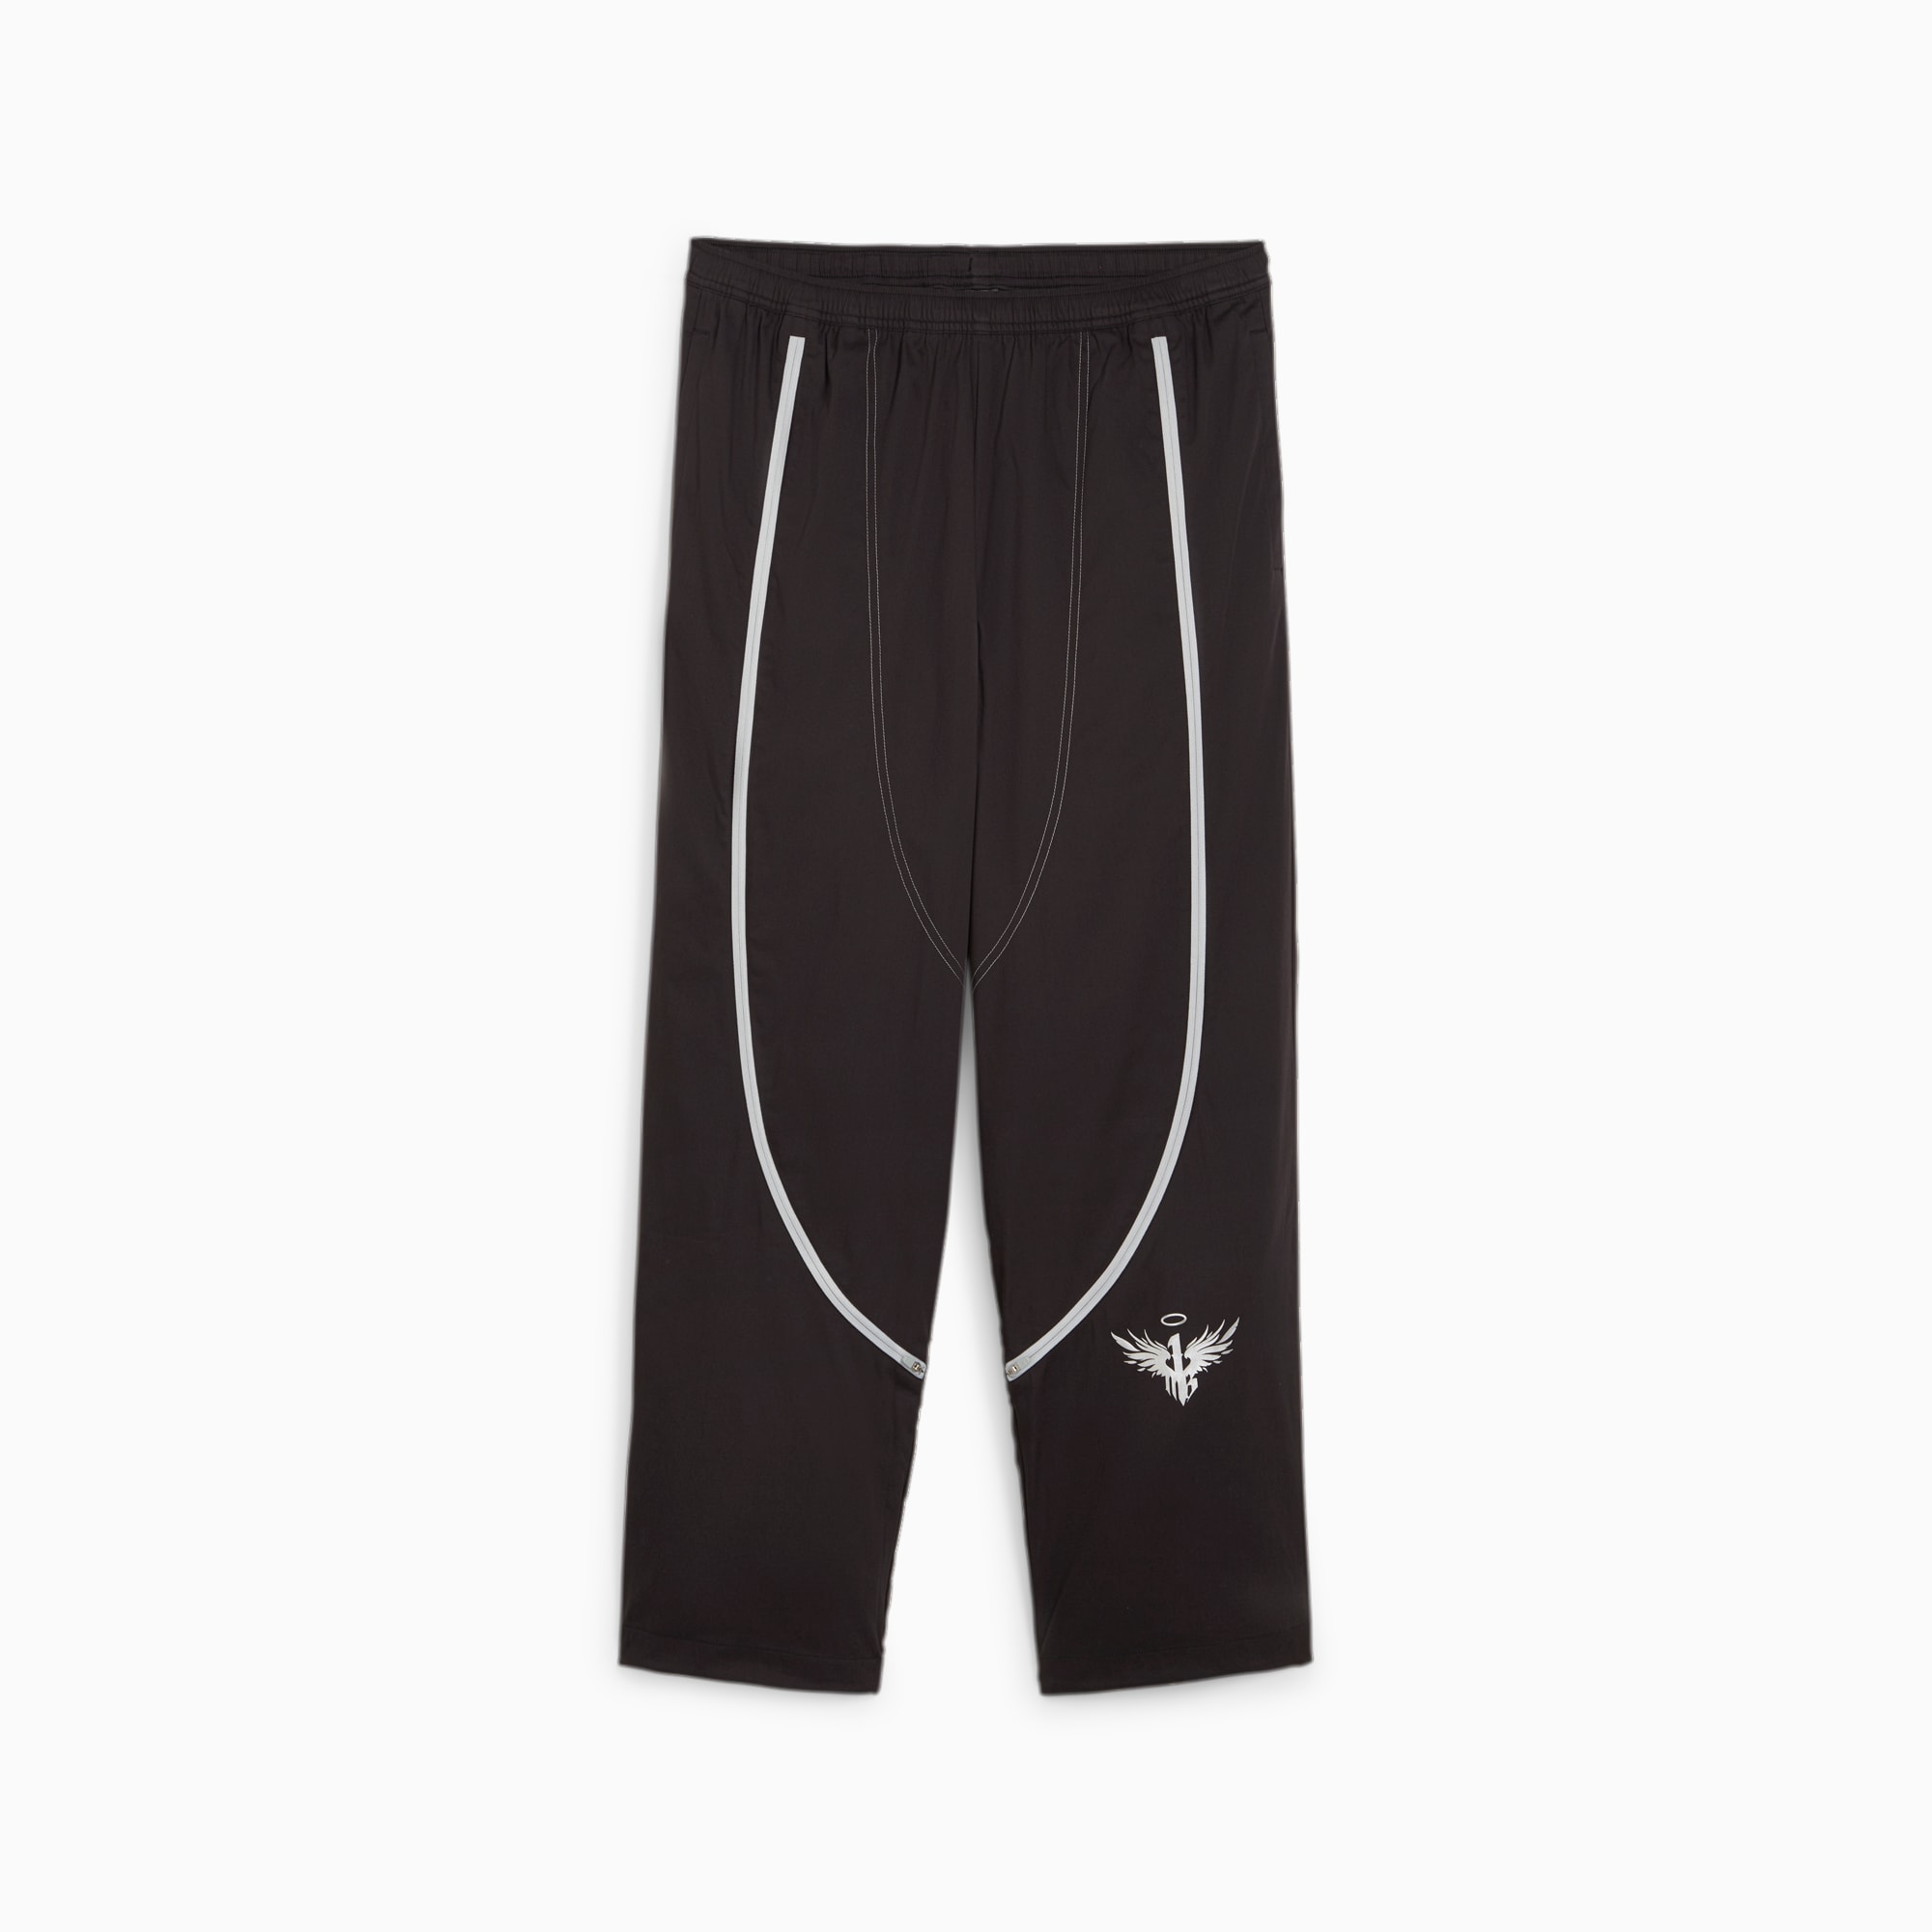 PUMA Melo X Toxic Men's Basketball Dime Pants, Black, Size 4XL, Clothing